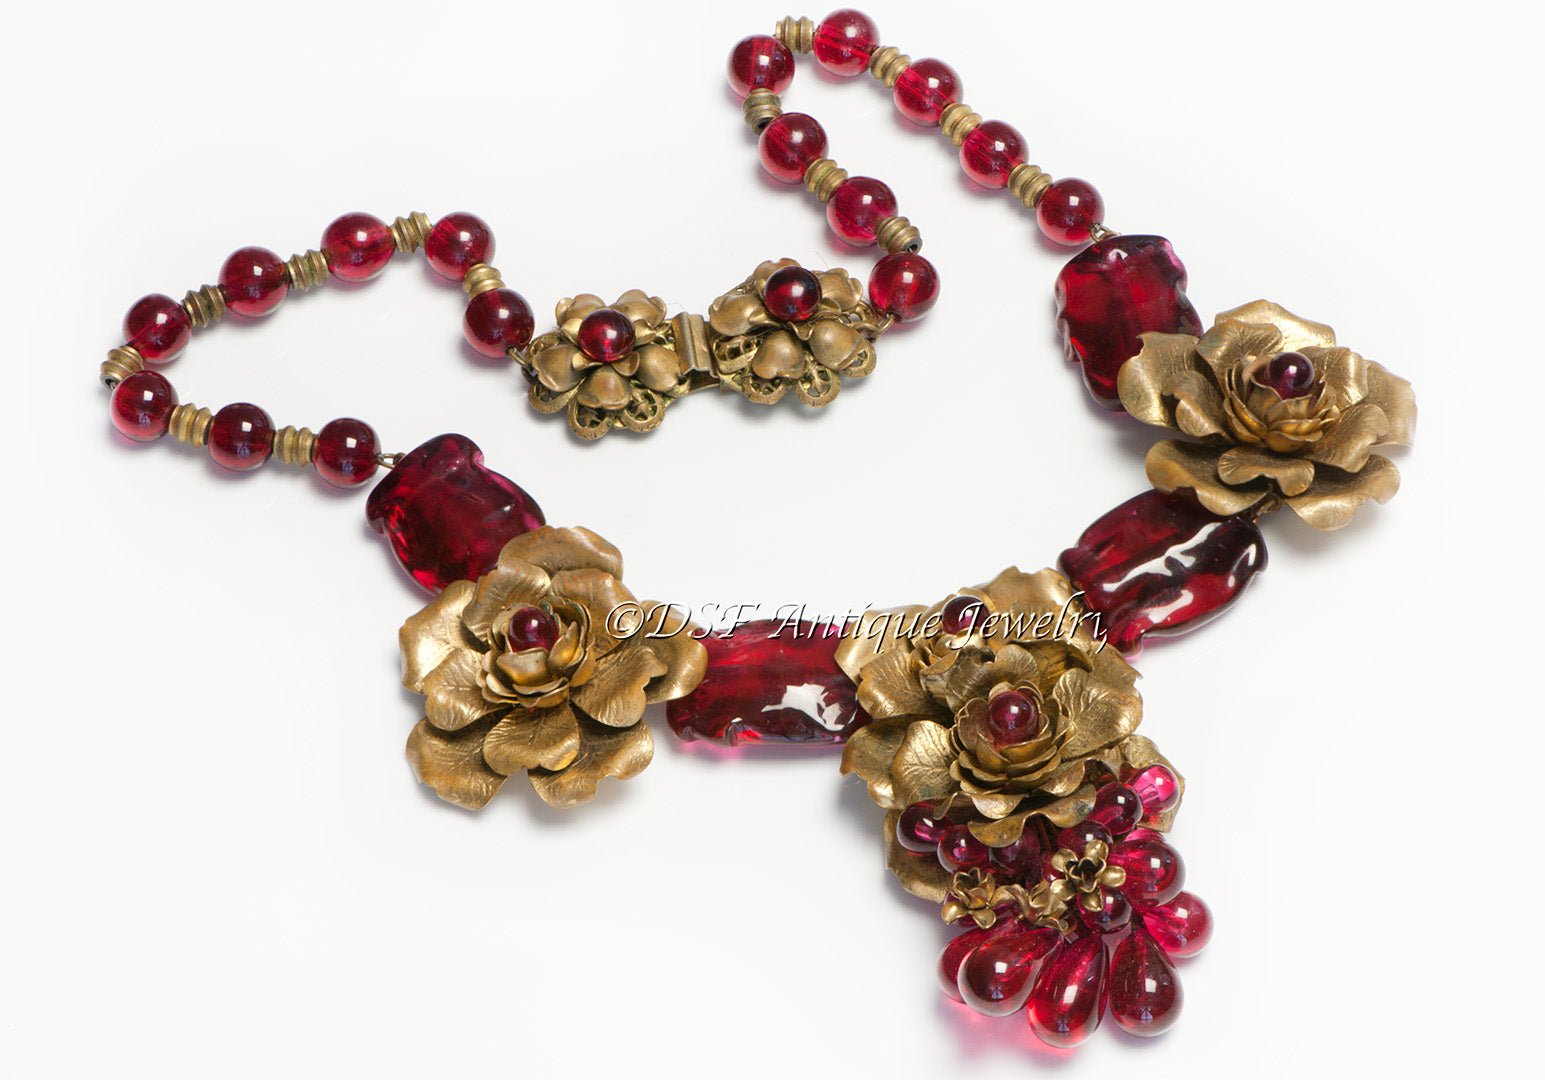 Chanel Paris Louis Rousselet 1930's Red Poured Glass Camellia Necklace - DSF Antique Jewelry